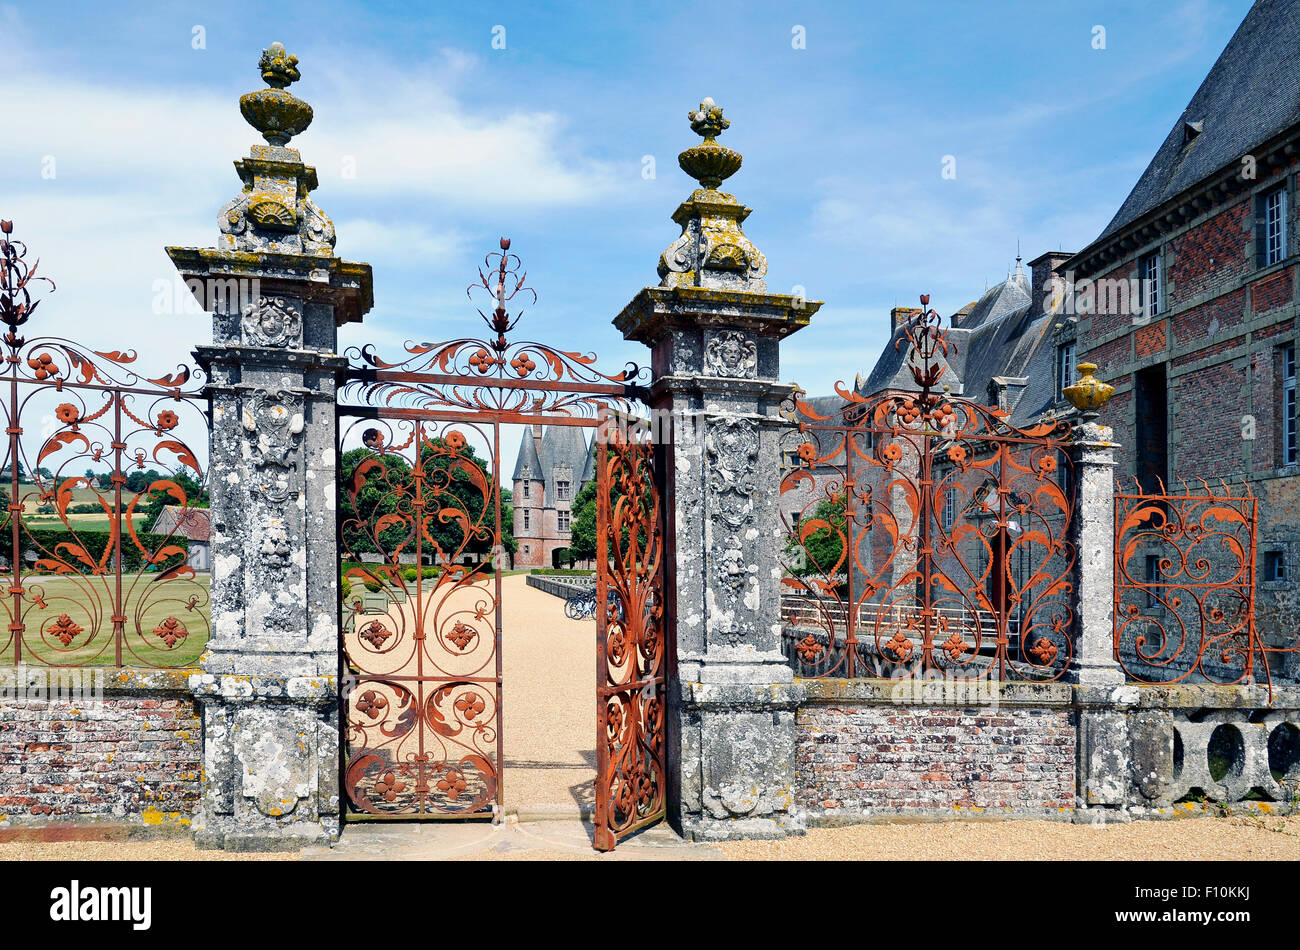 Ornate iron gates at the Château de Carrouges, an unusual brick built castle in Carrouges, Basse Normandie, France. Stock Photo